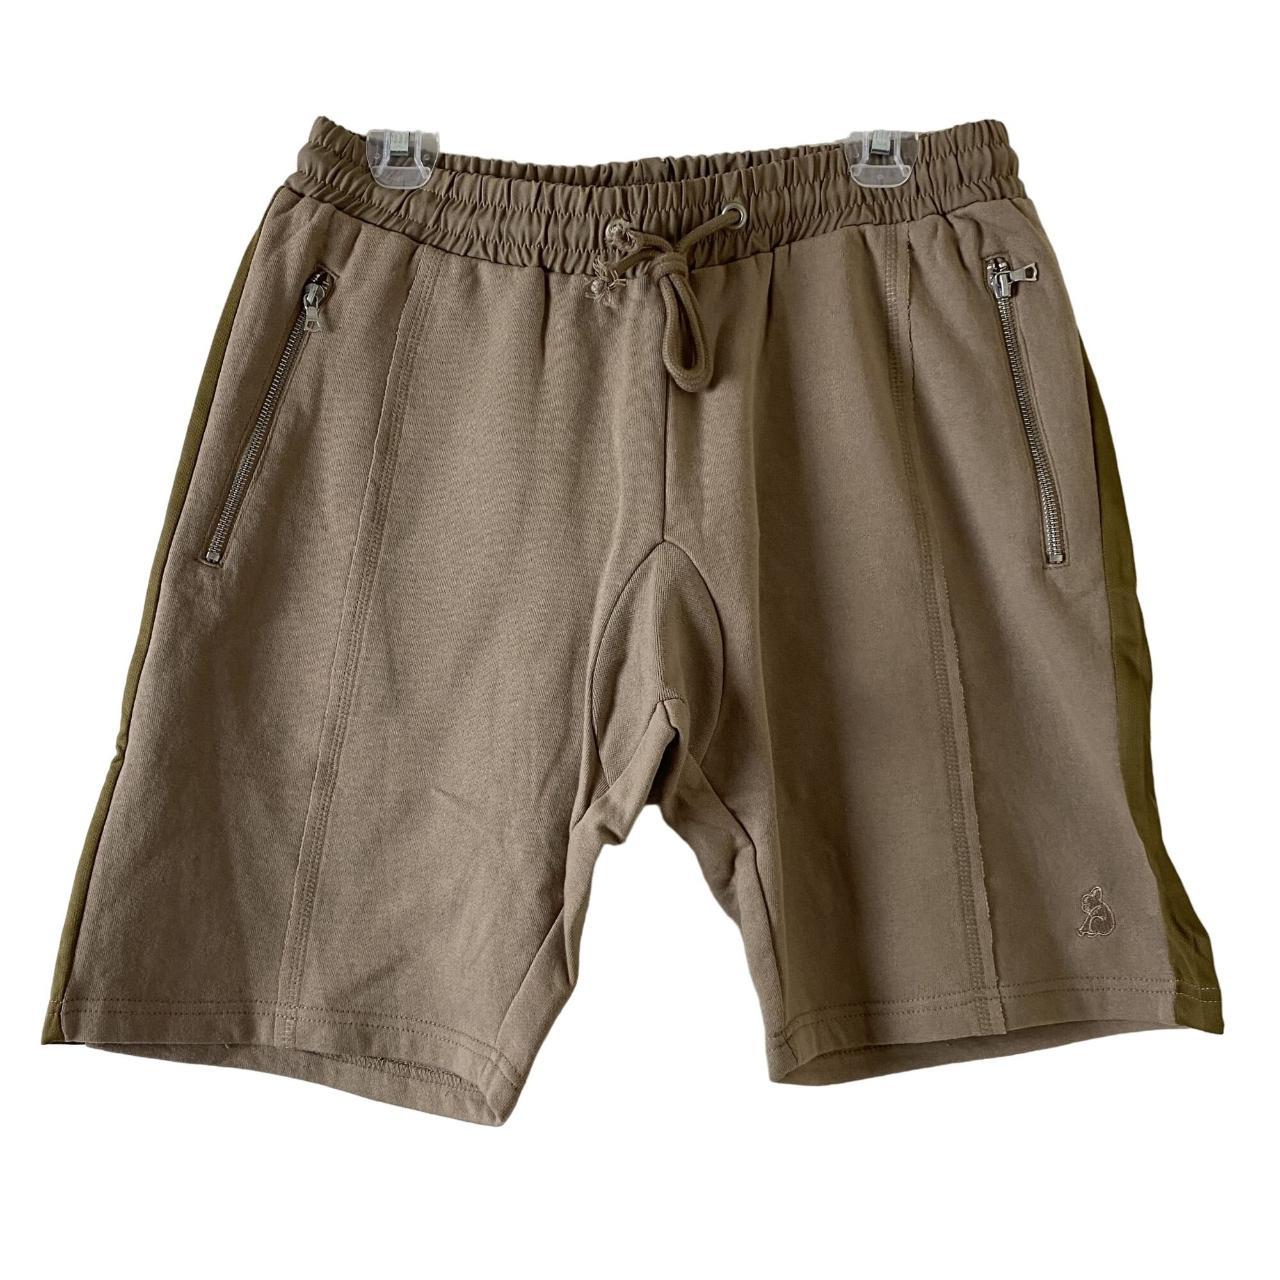 Kuwalla Tee Men's Khaki and Brown Shorts